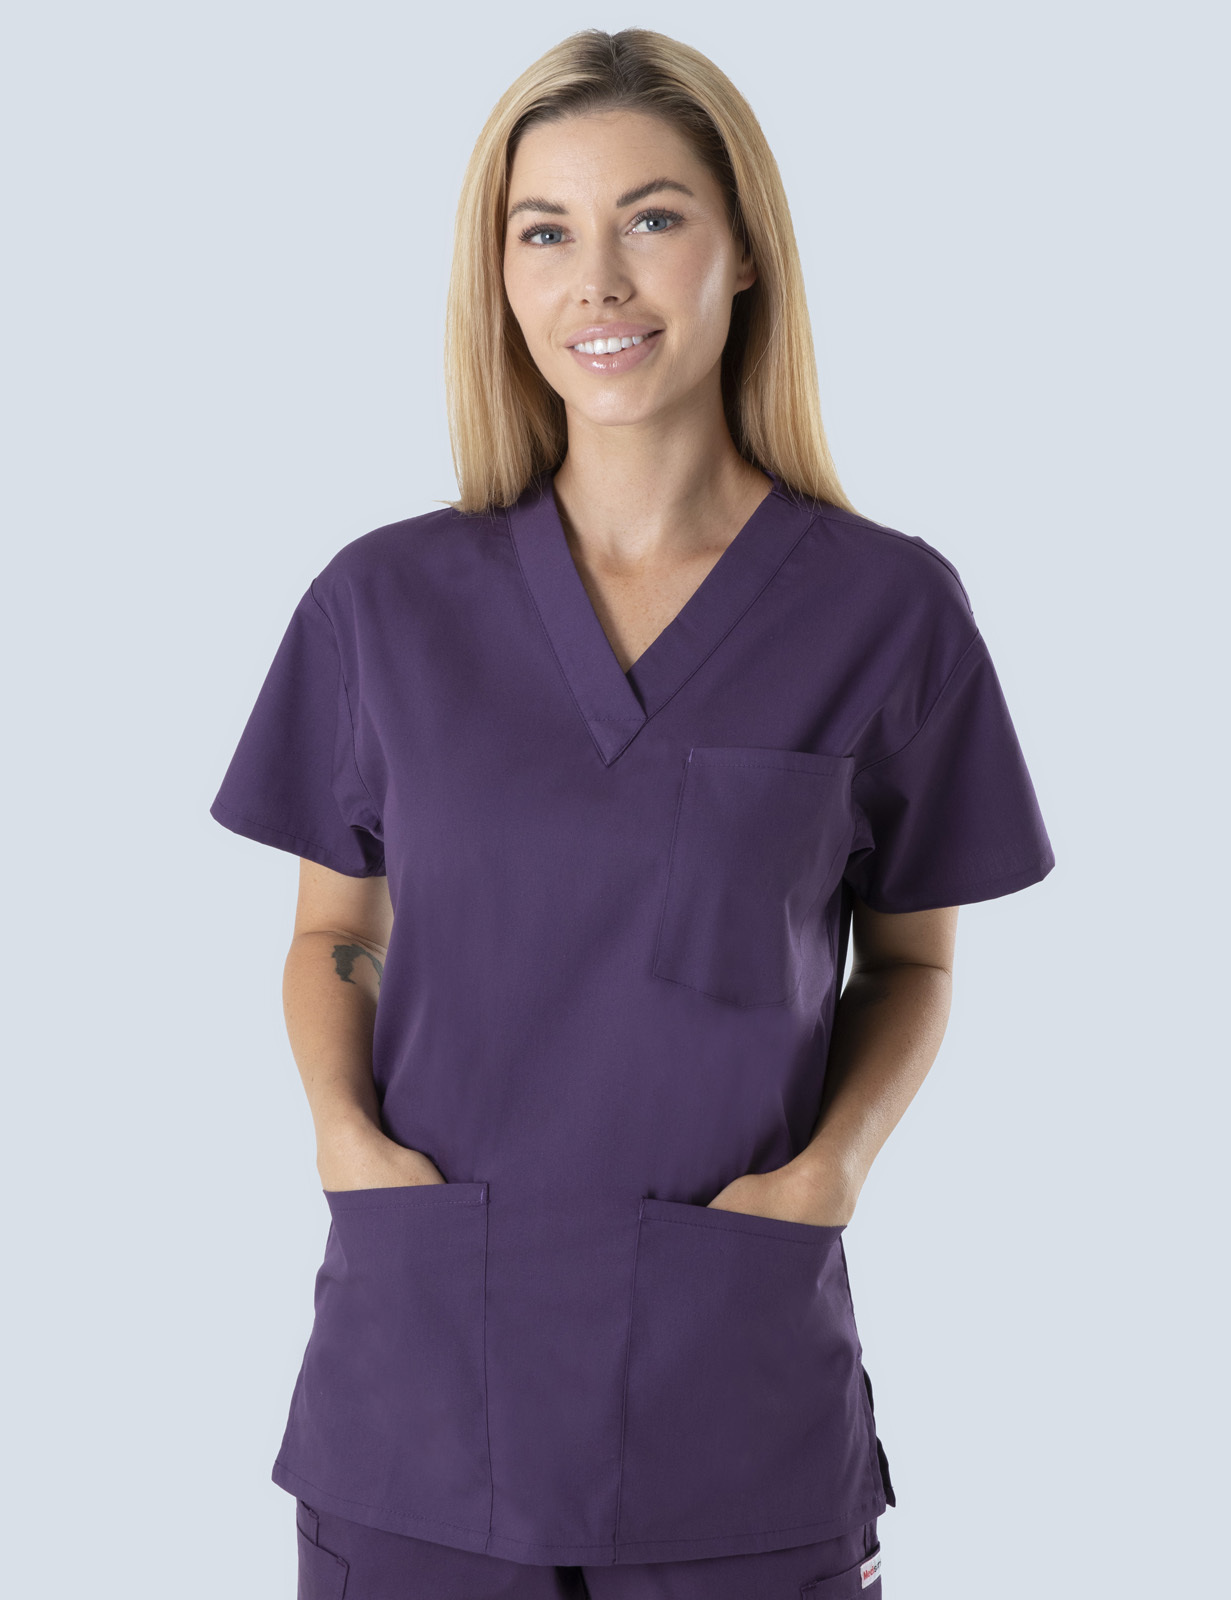 Toowoomba Hospital Pharmacist Interns Uniform Set Bundle (4 Pocket Top and Cargo Pants in Navy incl Logos)